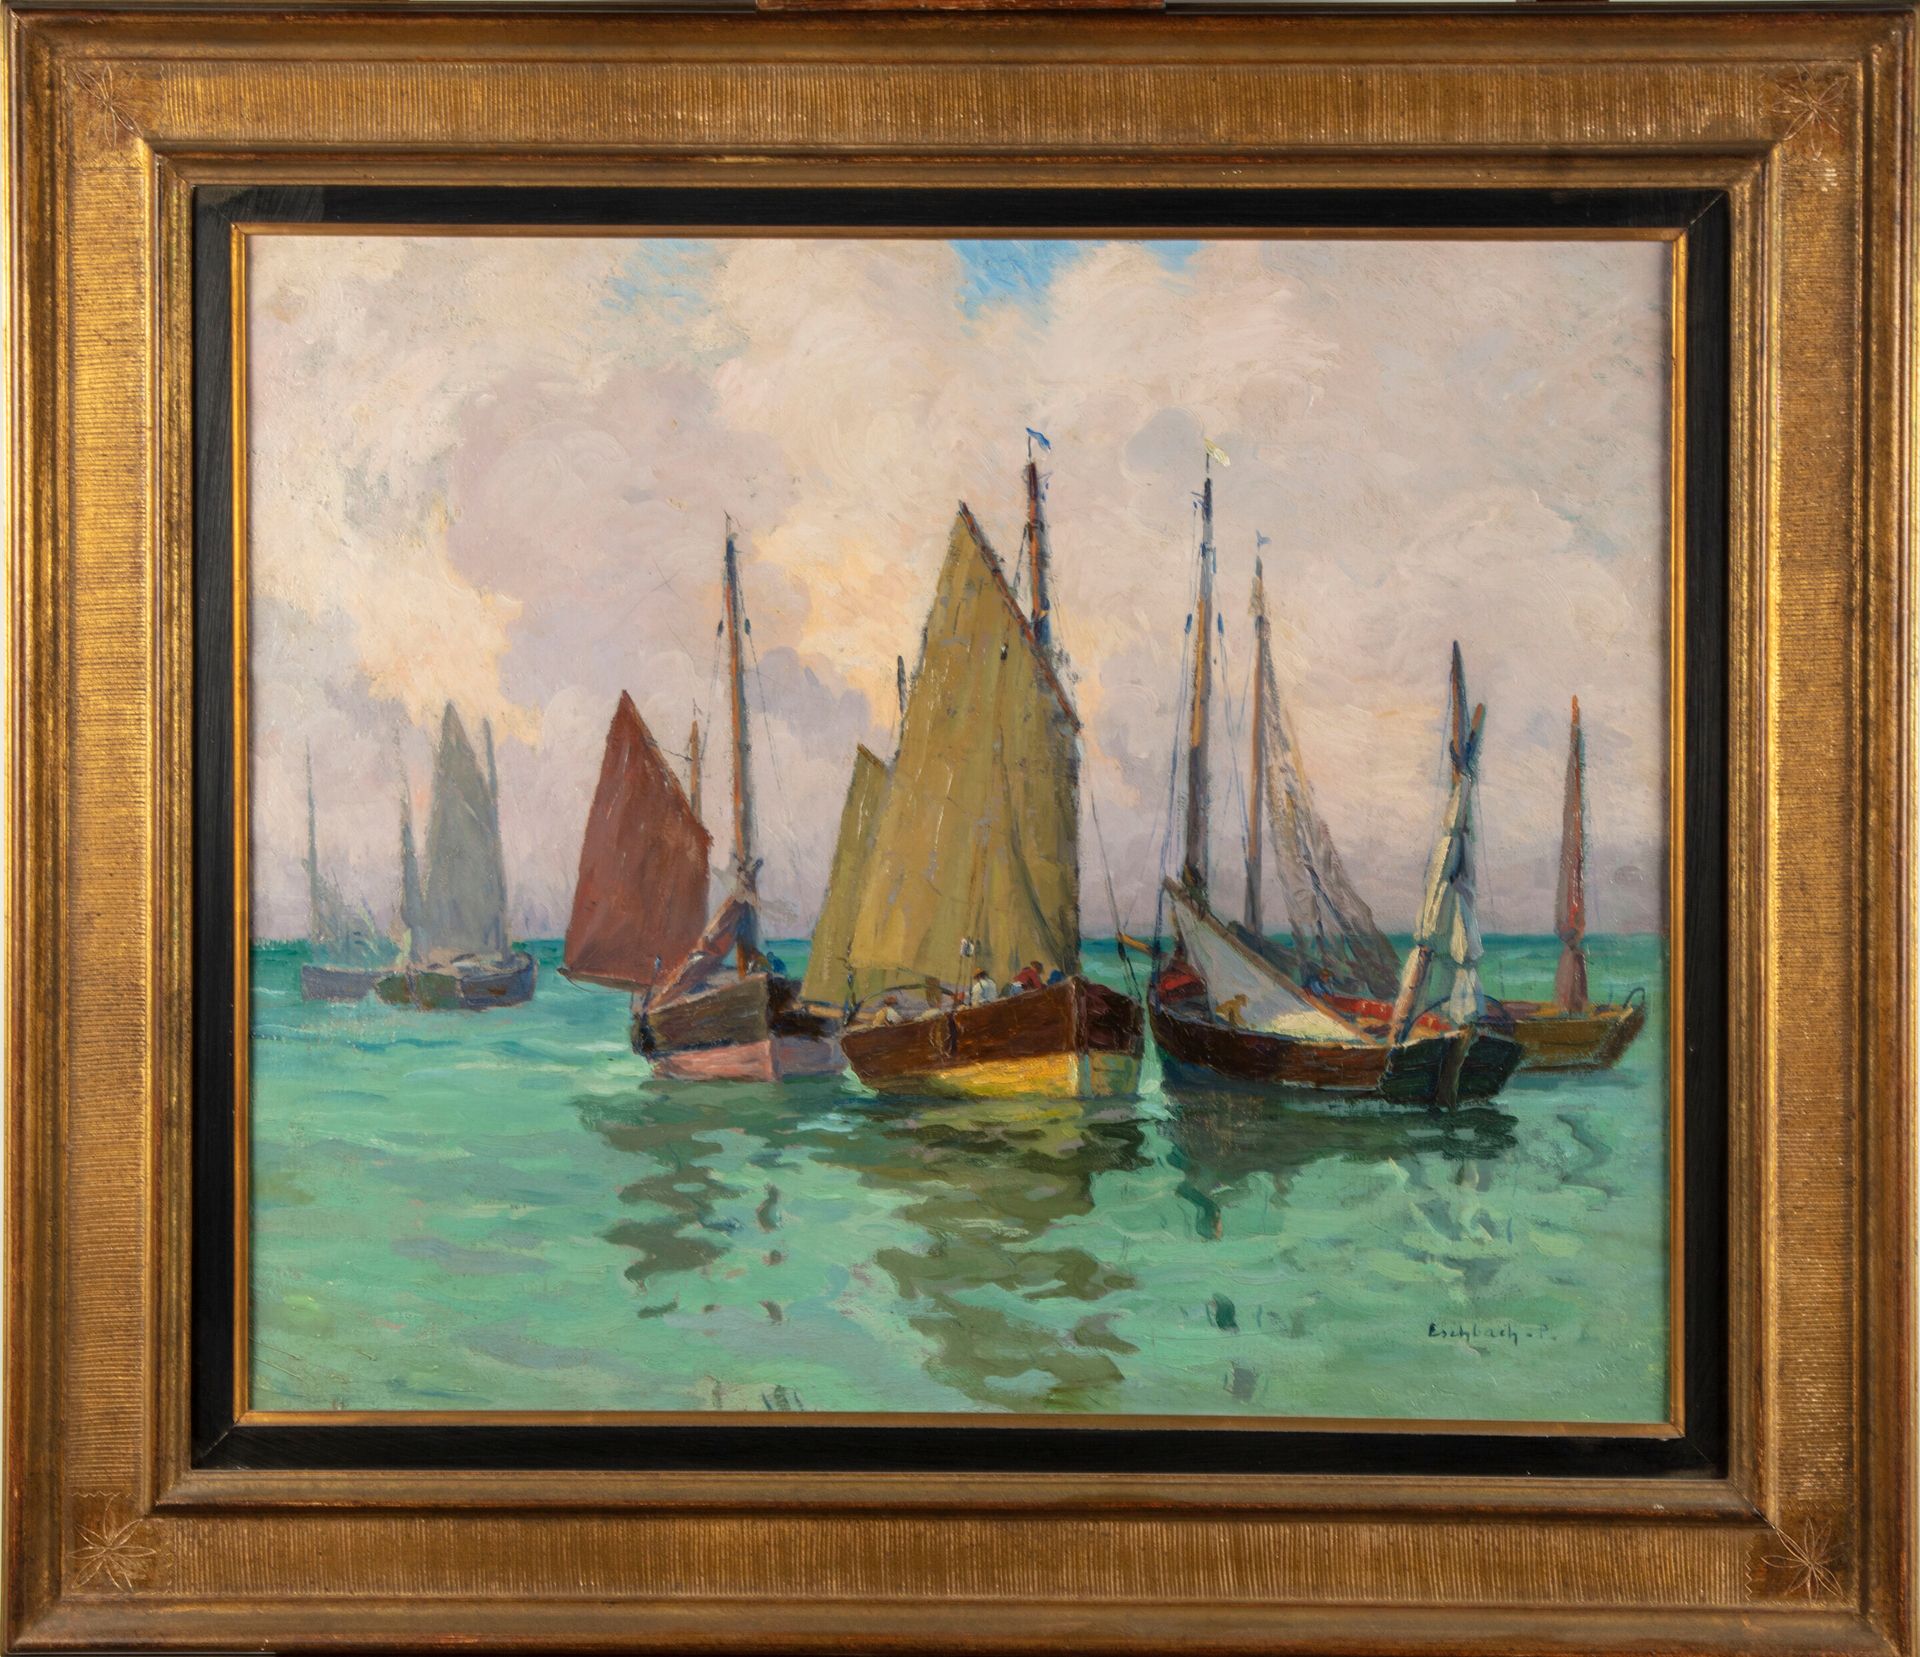 ESCHBACH Paul ESCHBACH (1881-1961)

The Sailboats 

Oil on canvas, signed lower &hellip;